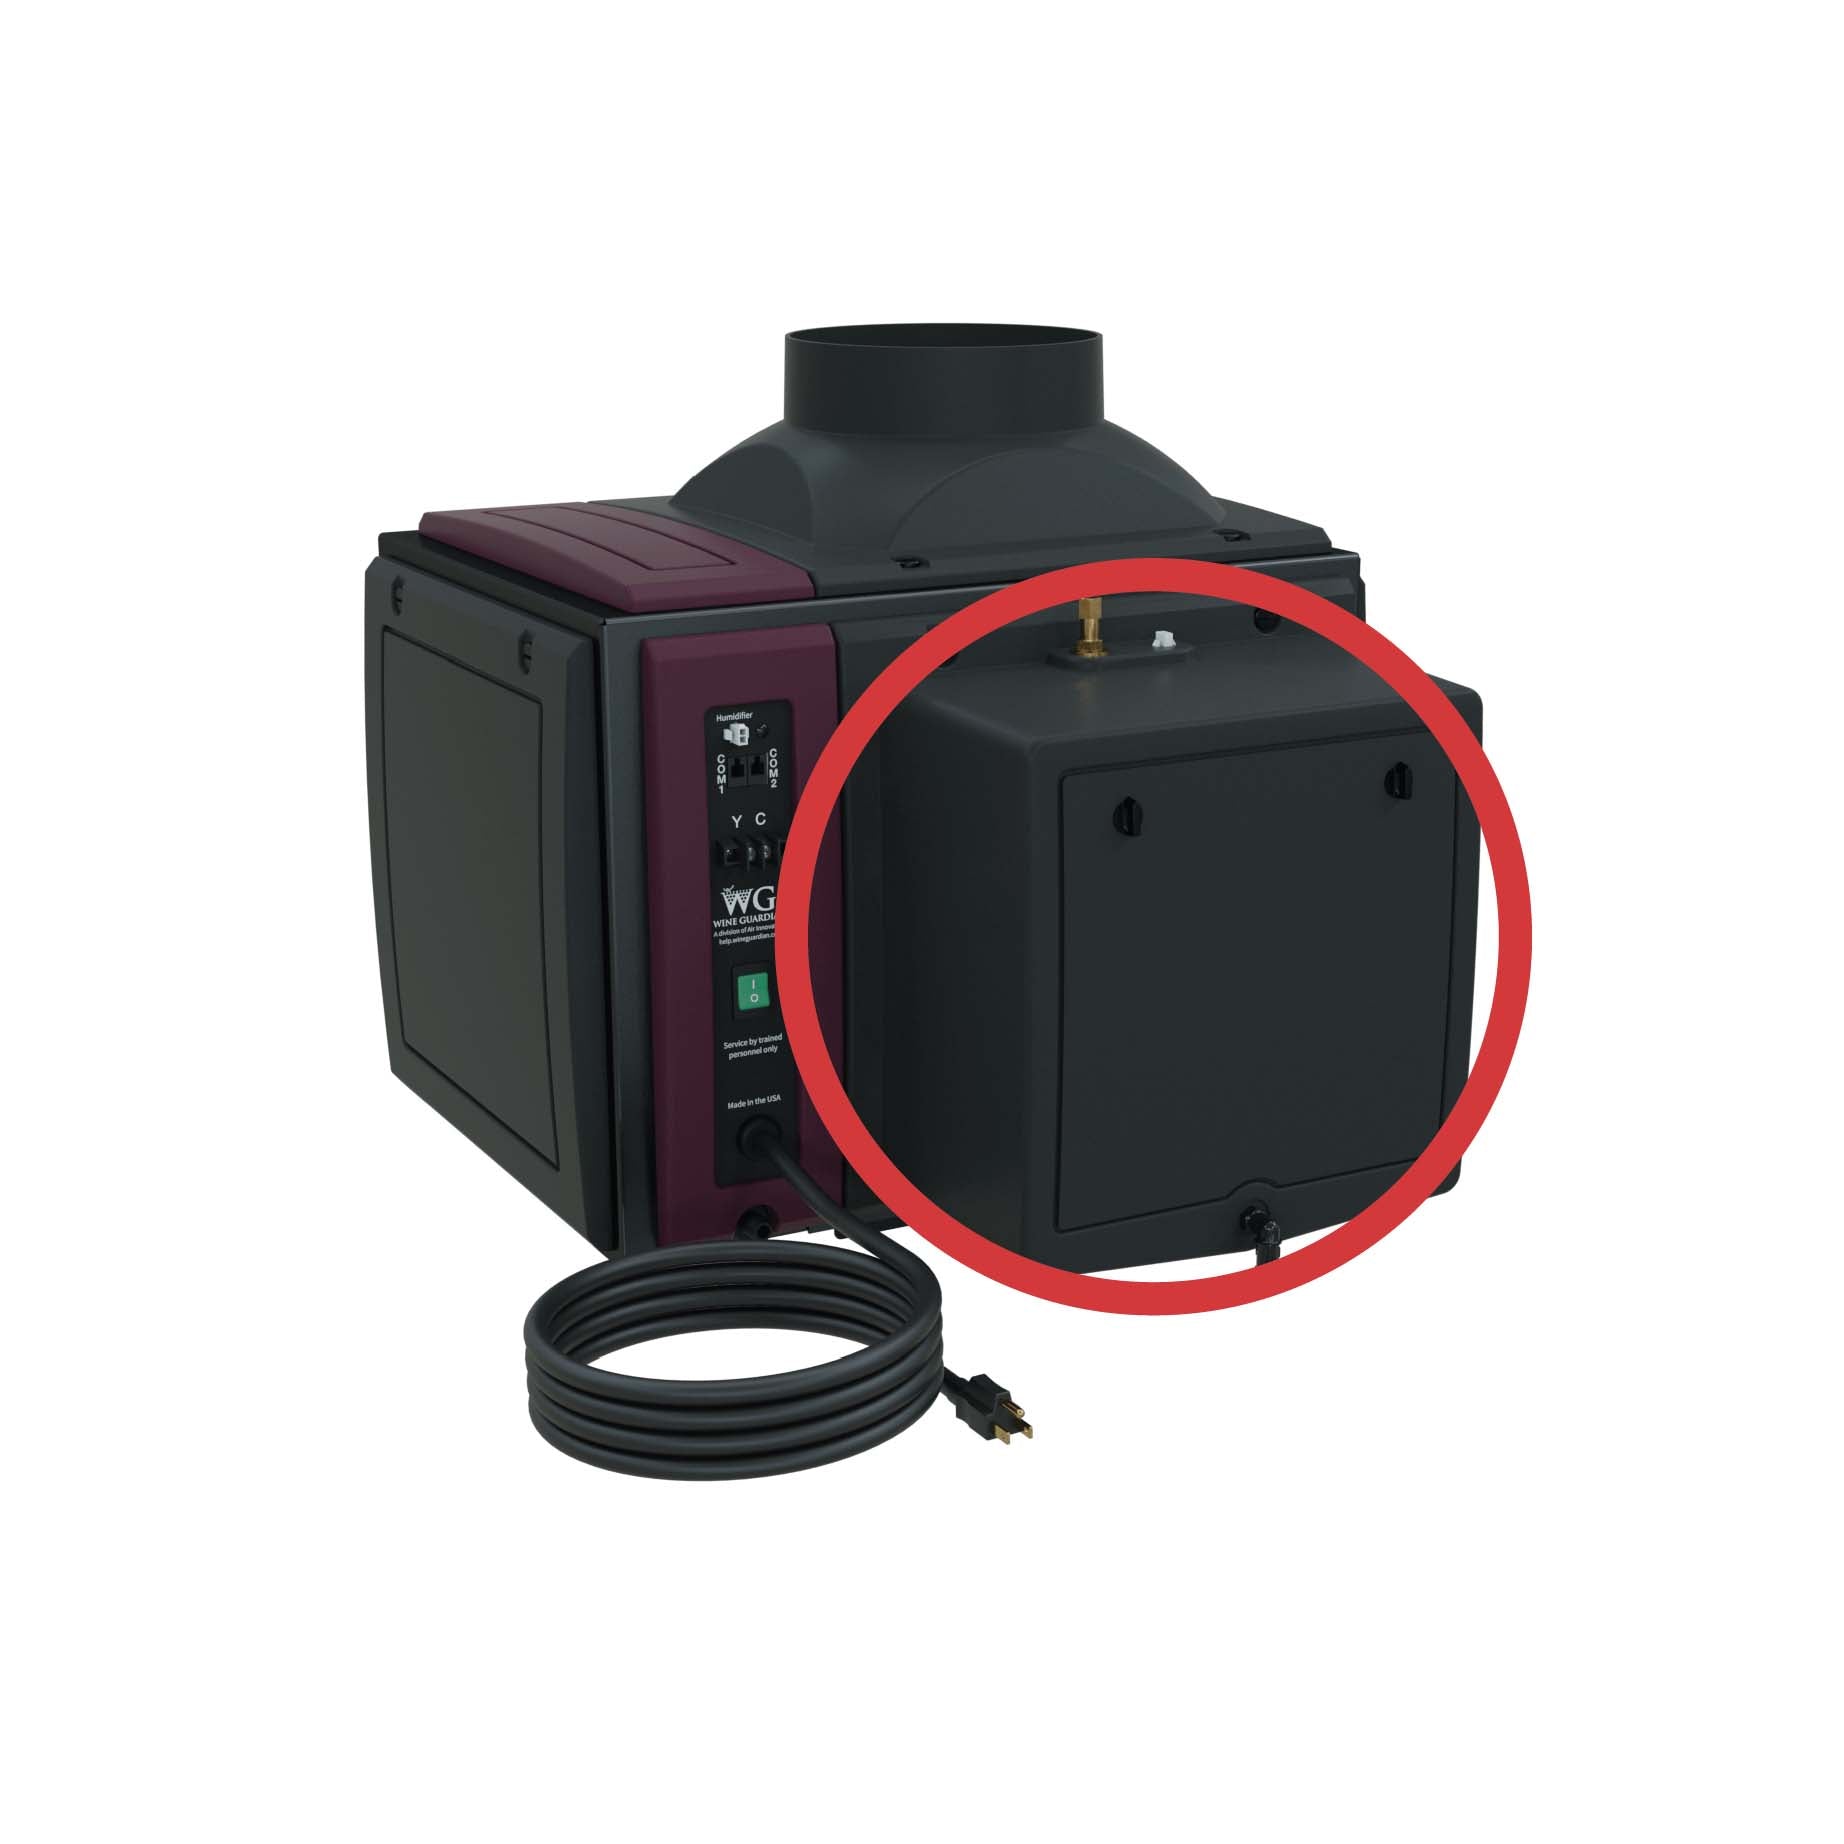 Integrated Sentinel Humidifier for the D050, D088, D200, DS050, DS088, DS200, DP50, DP88, DP200, SP50, SP88, SP200 models